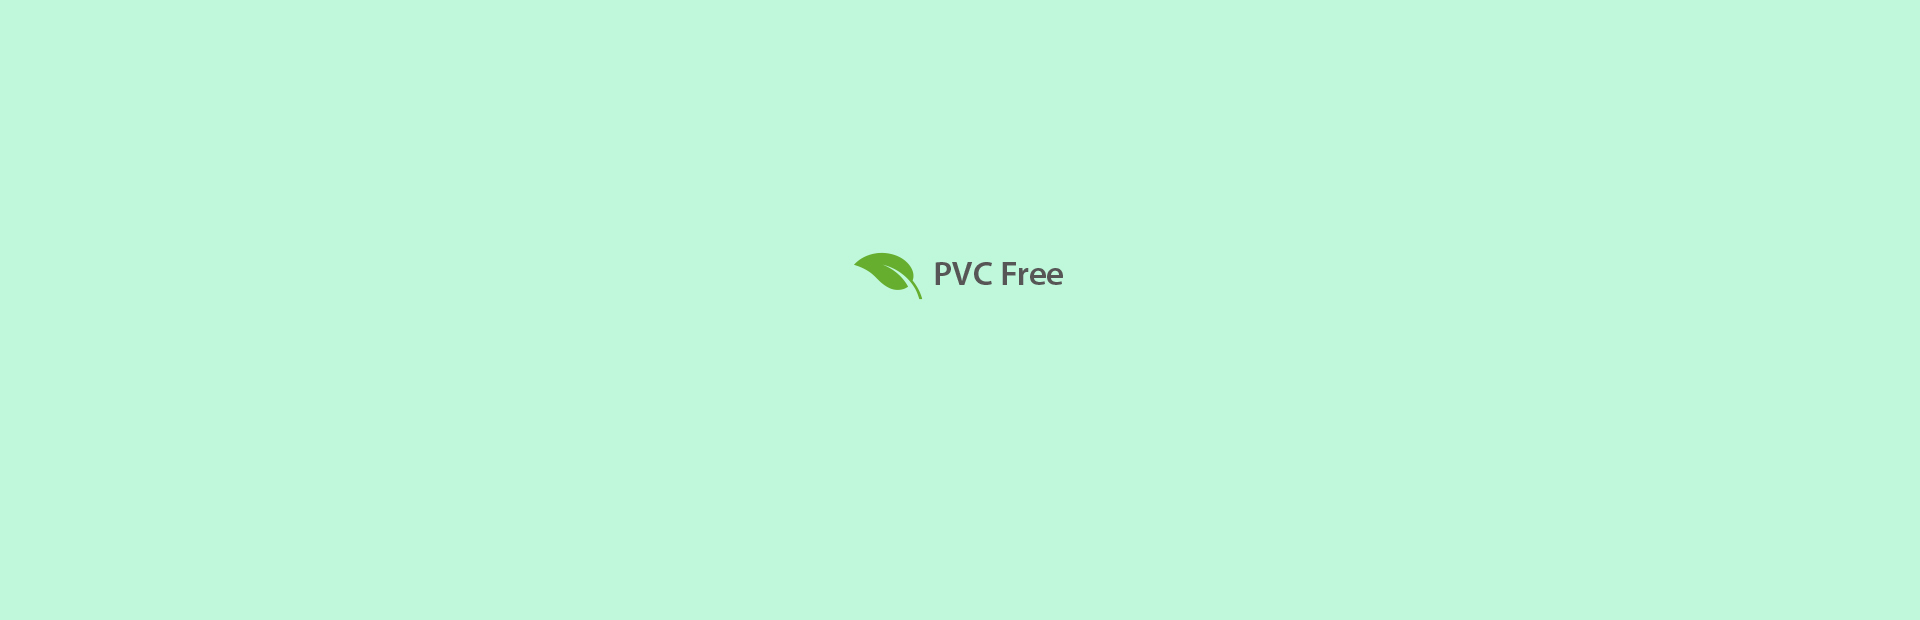 PVC Free SignVinyl